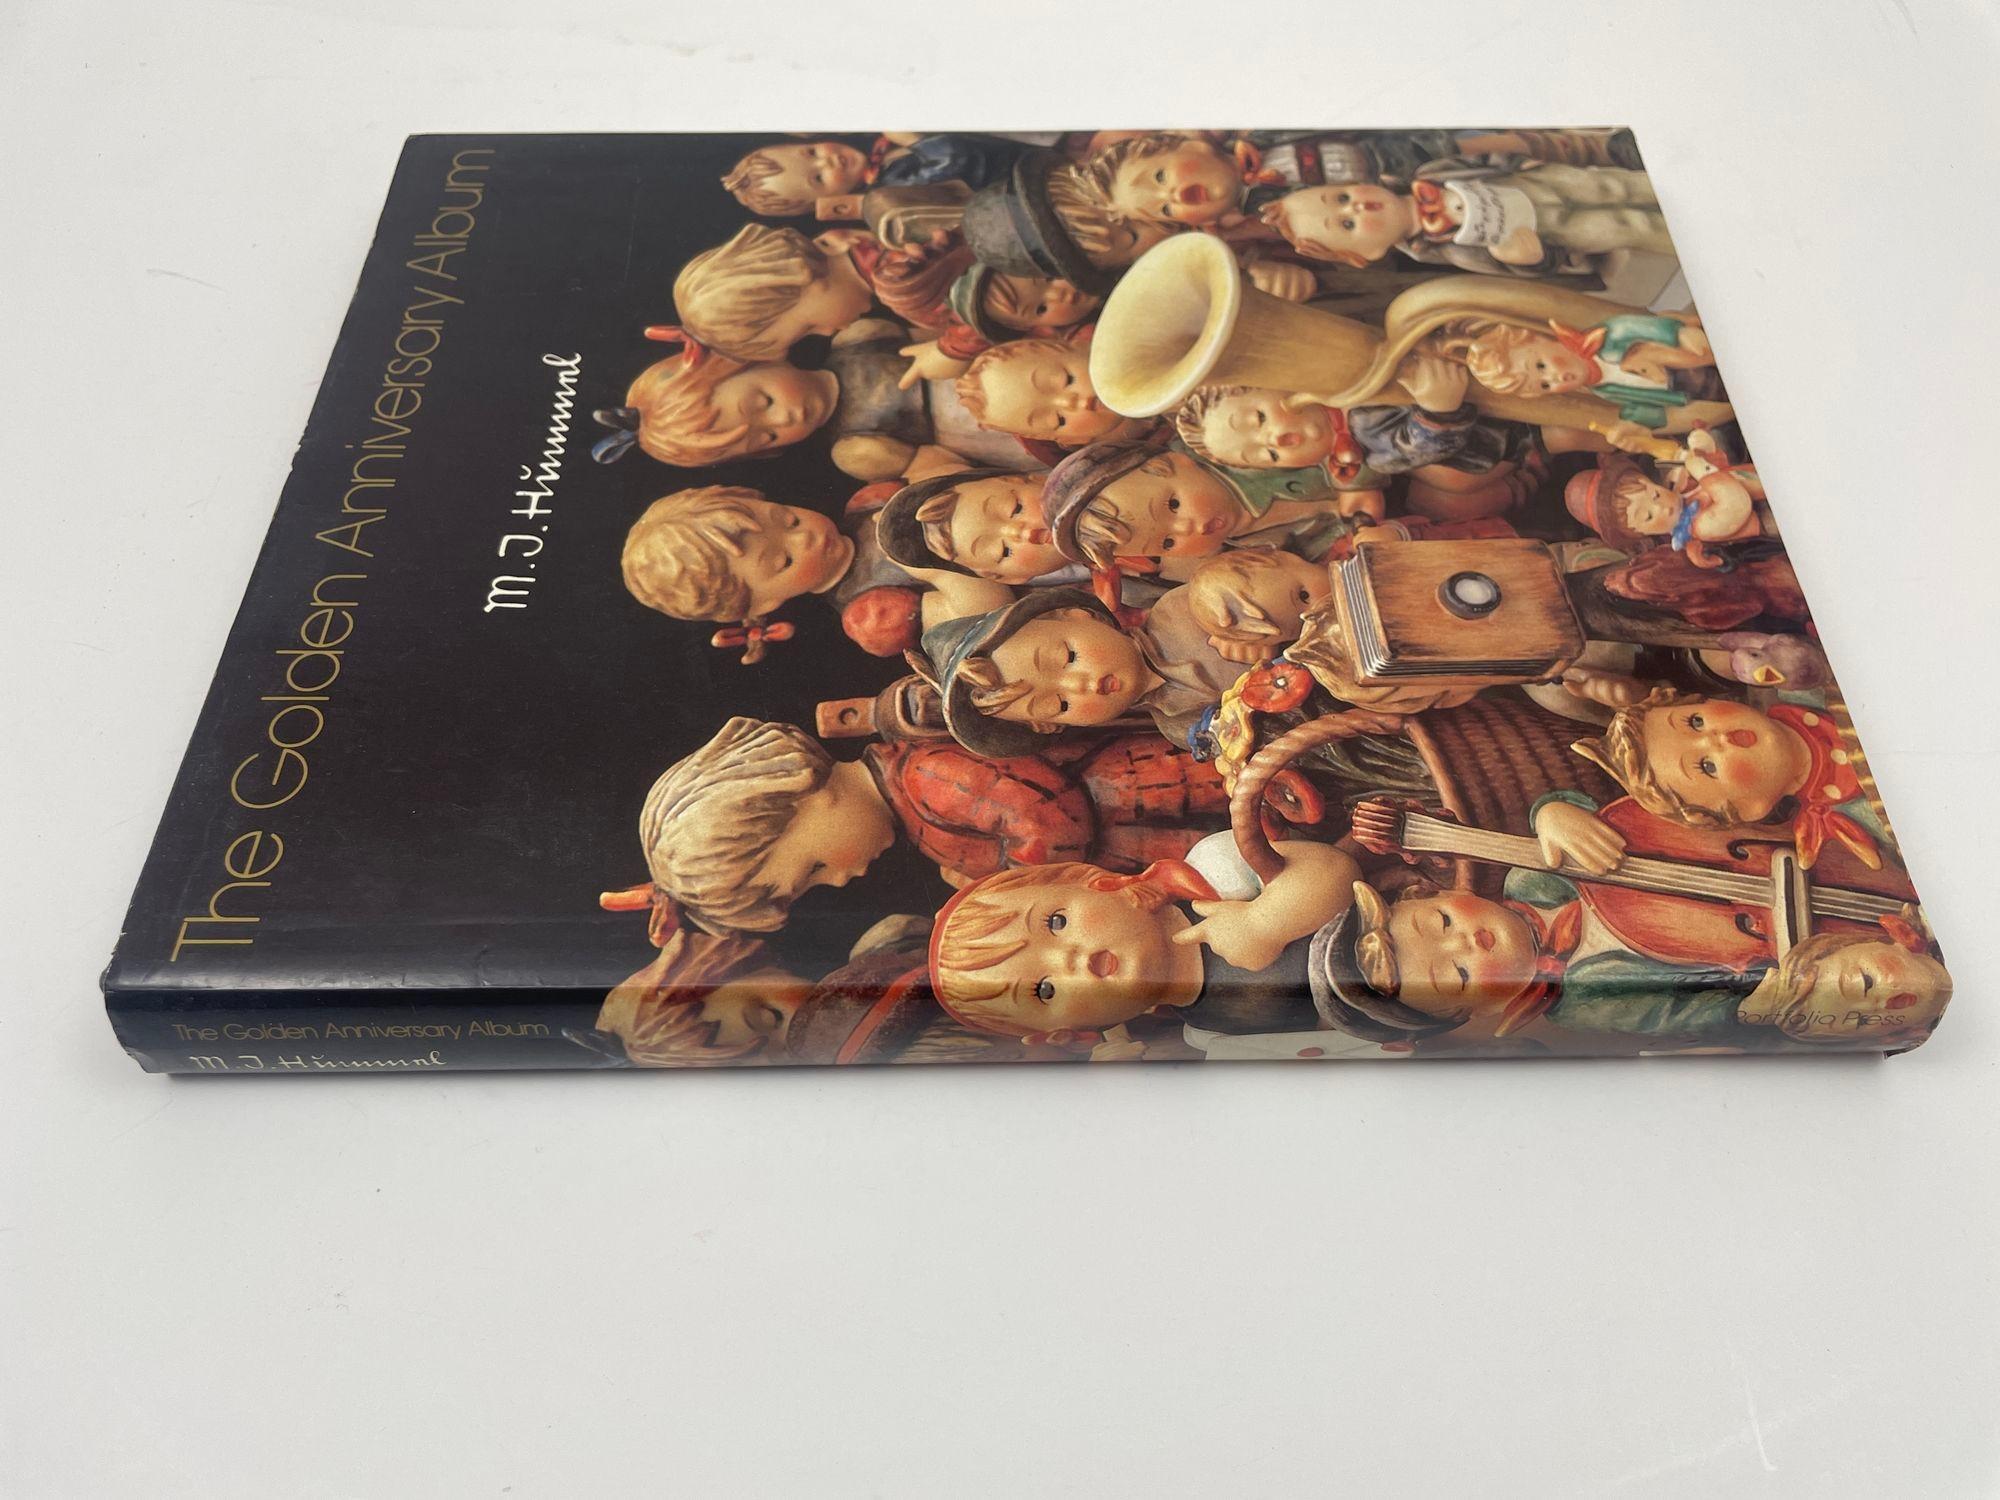 German M.I. Hummel The Golden Anniversary Album Hardcover 1st Ed. 1984 For Sale